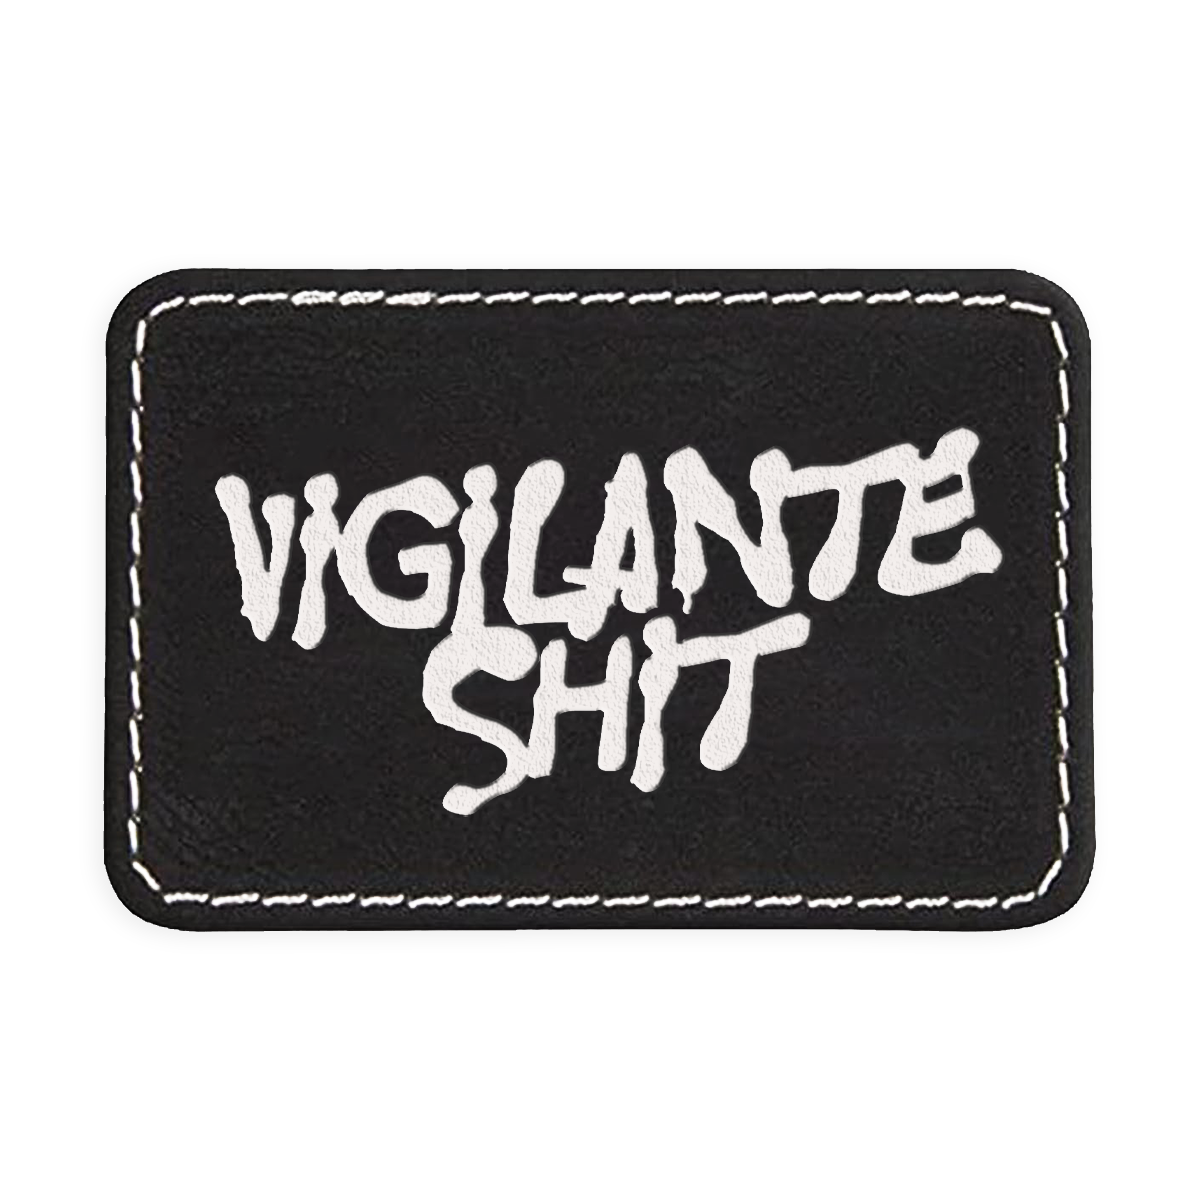 Vigilante Shit Engraved Patch